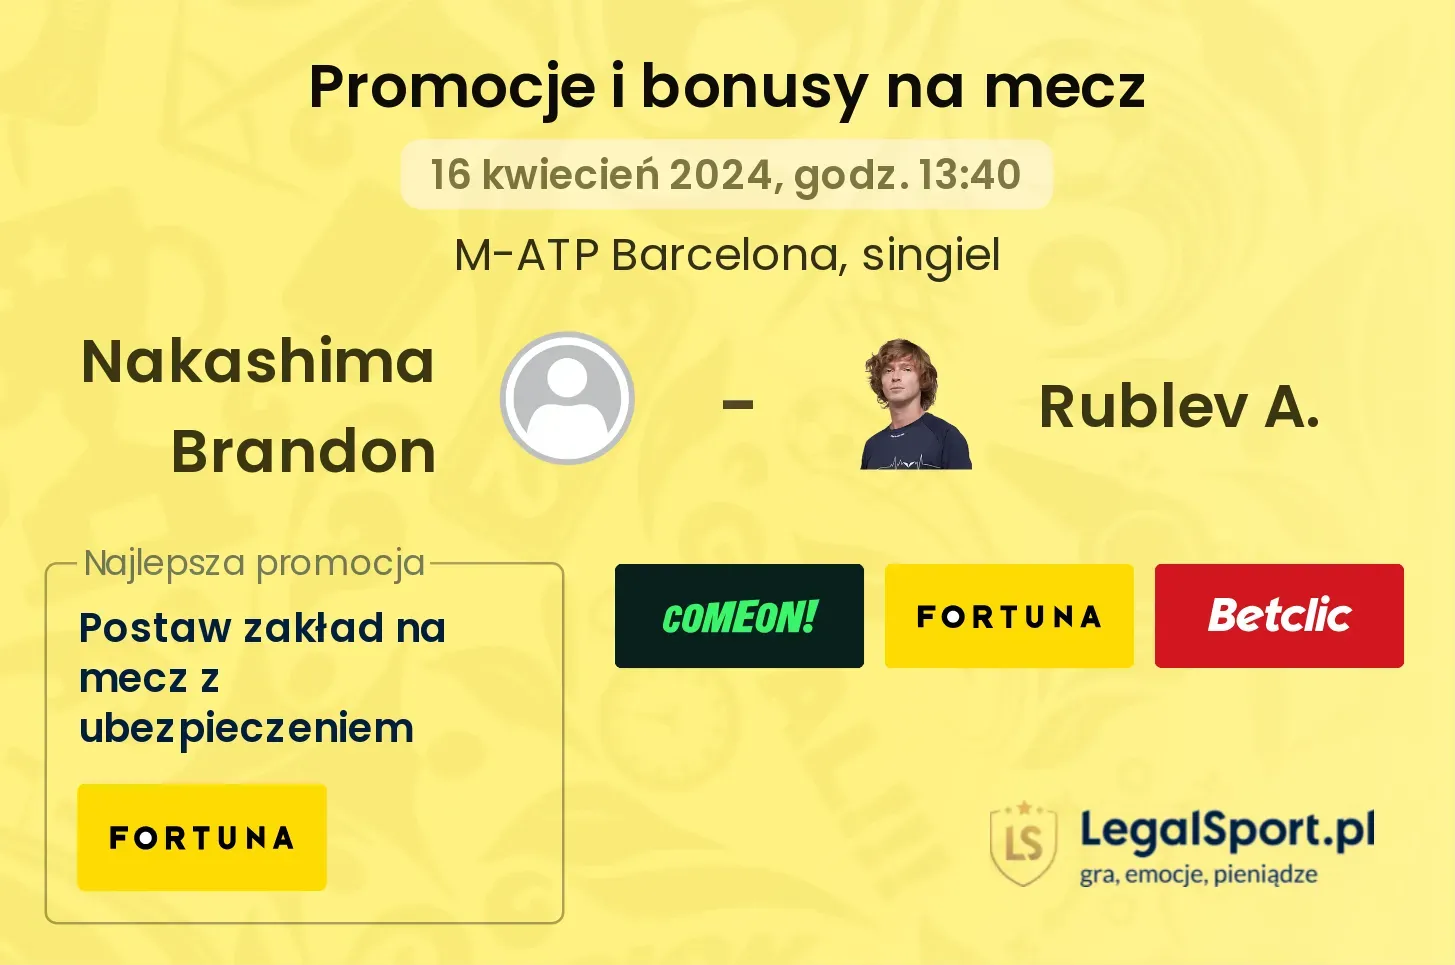 Nakashima Brandon - Rublev A. promocje bonusy na mecz